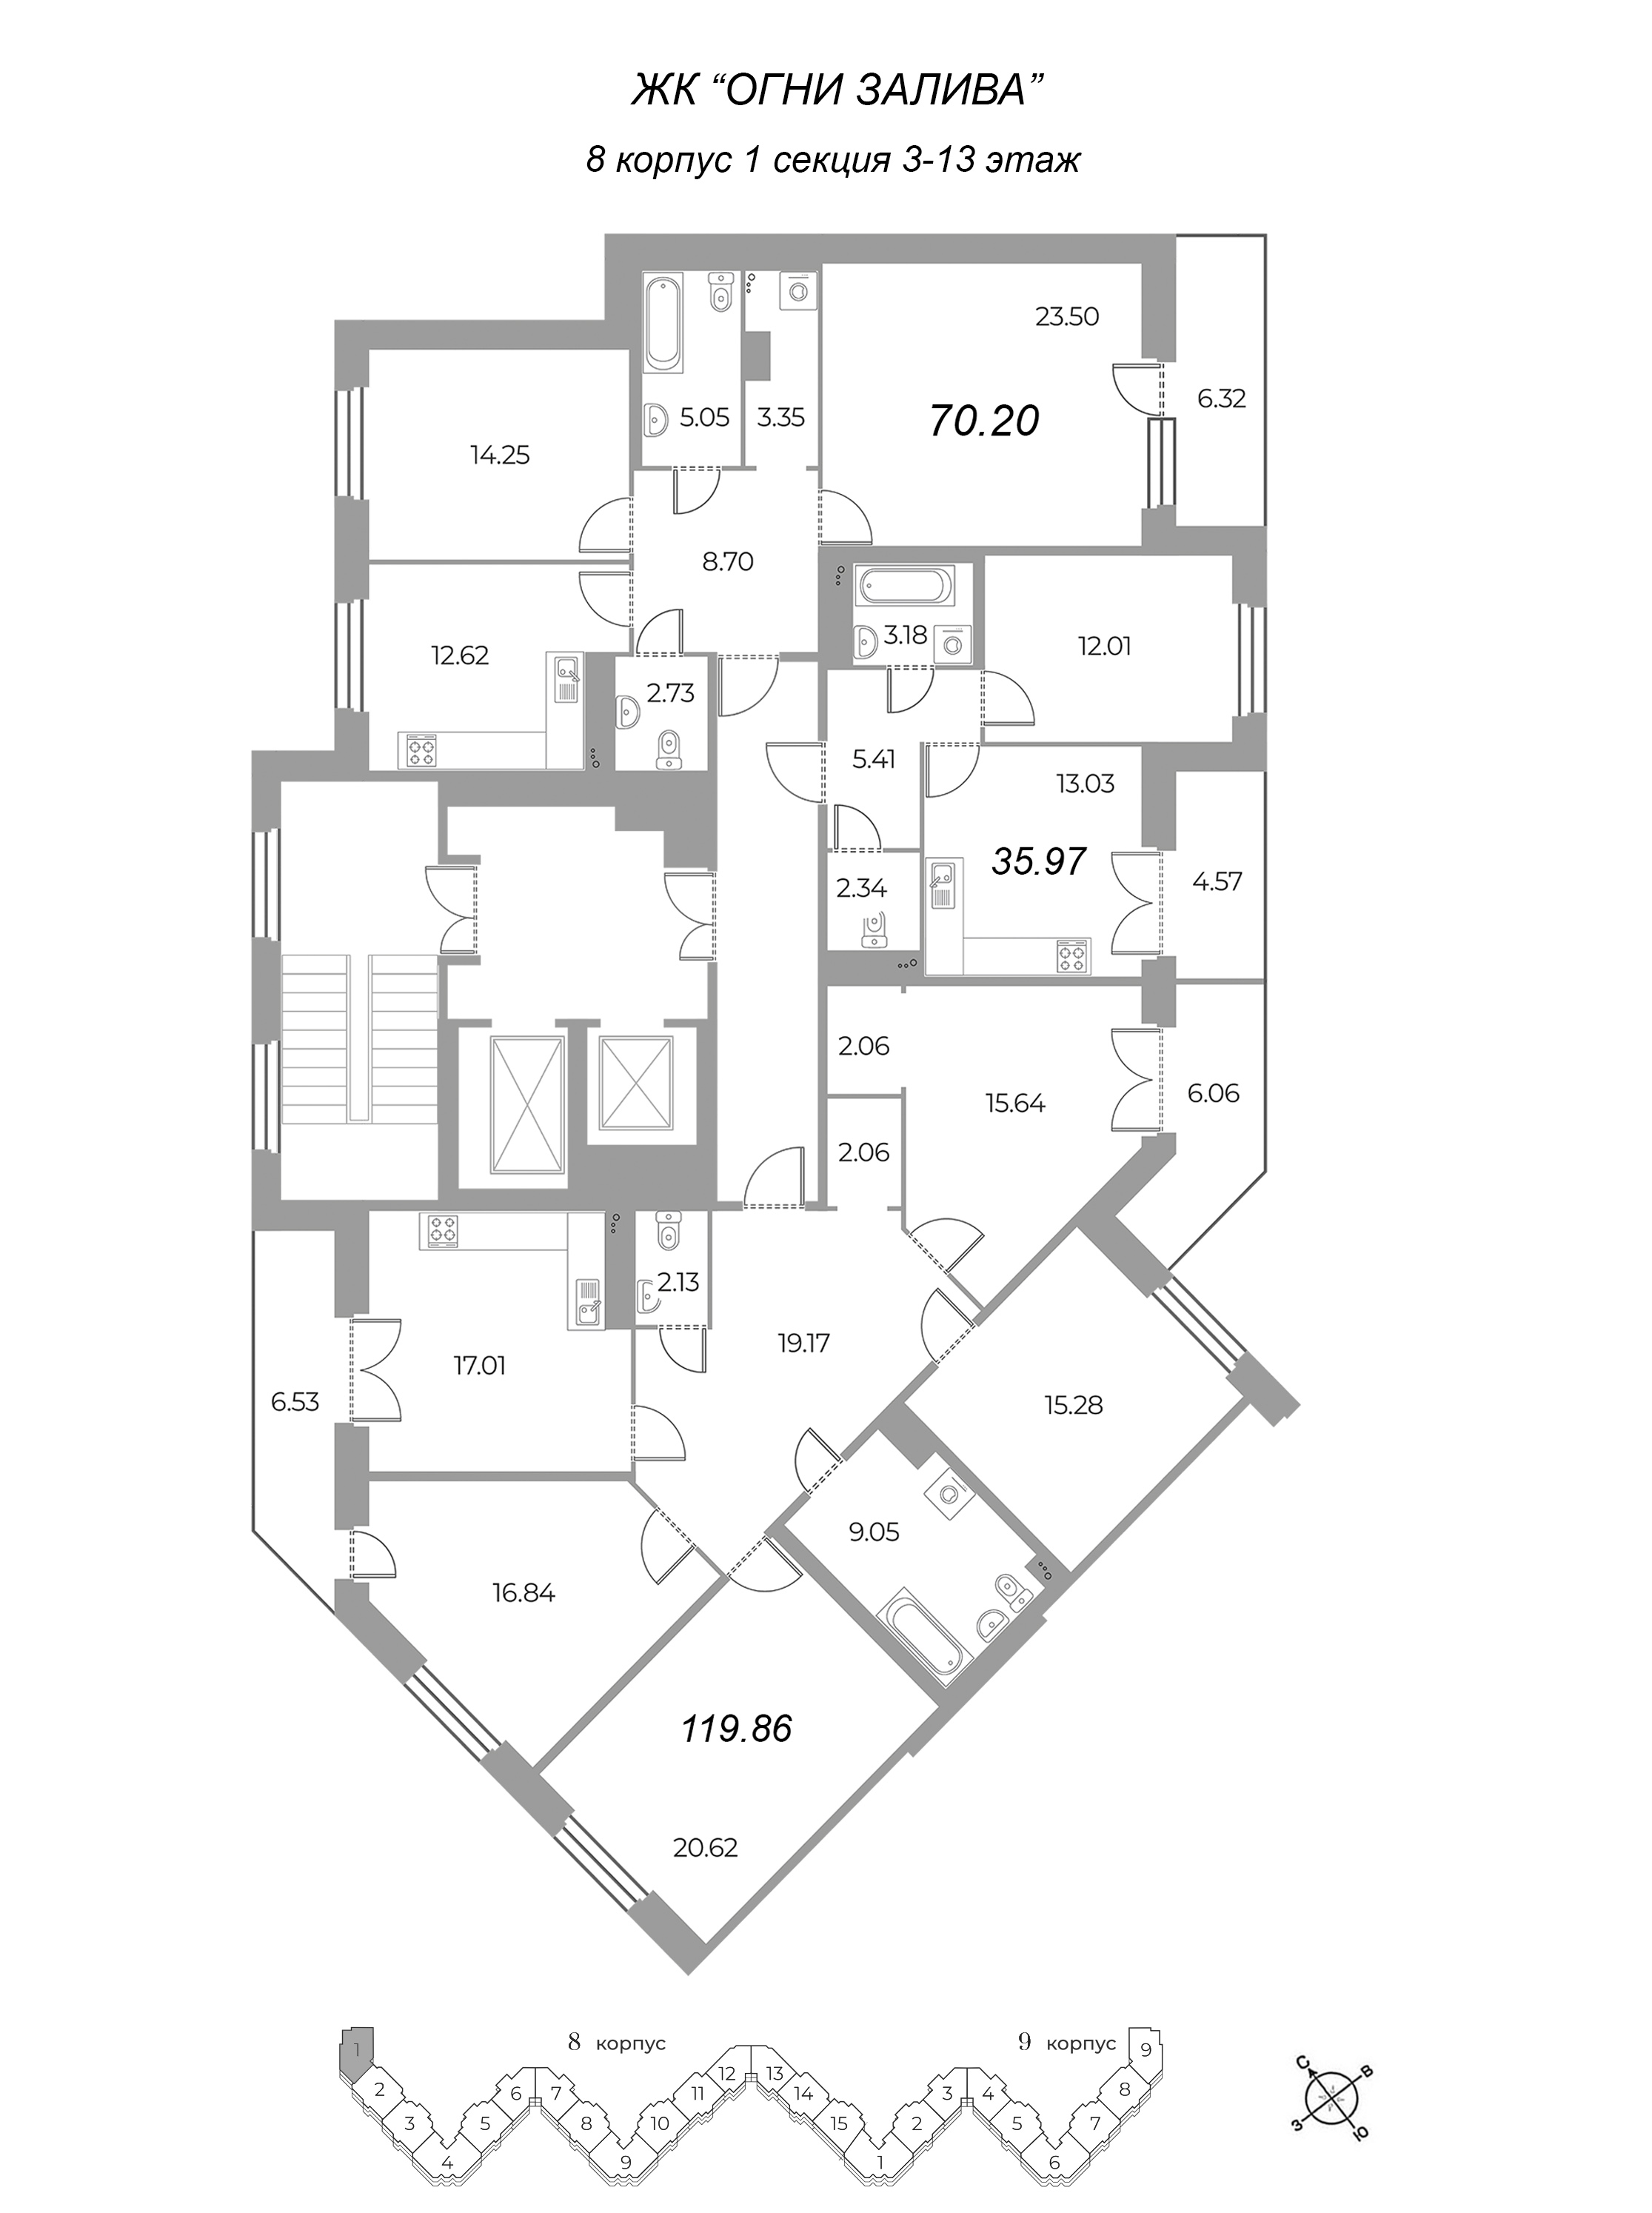 5-комнатная (Евро) квартира, 126.15 м² - планировка этажа